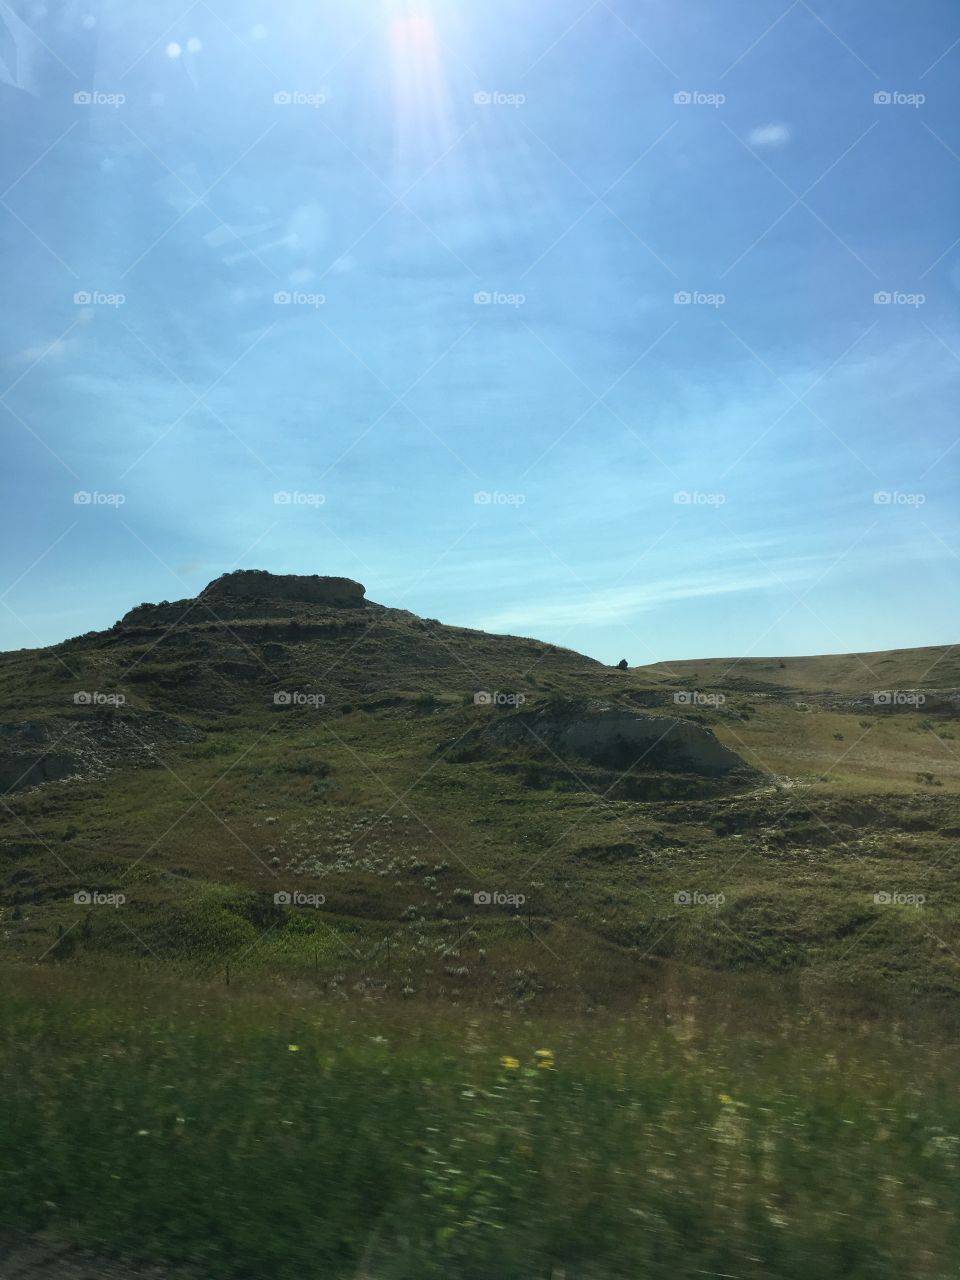 North Dakota landscape.